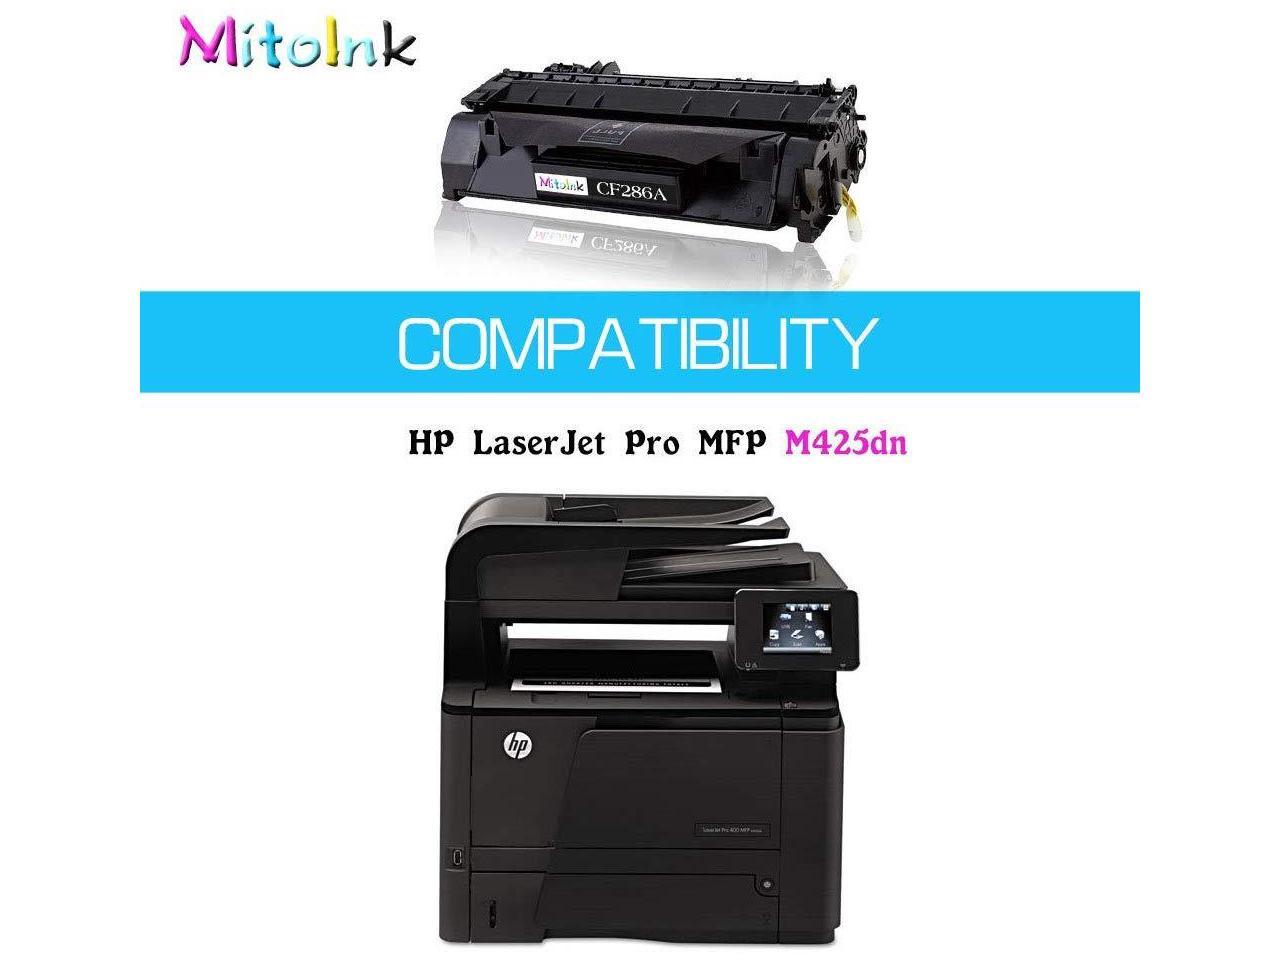 toner cartridge for hp laserjet p2055dn printer